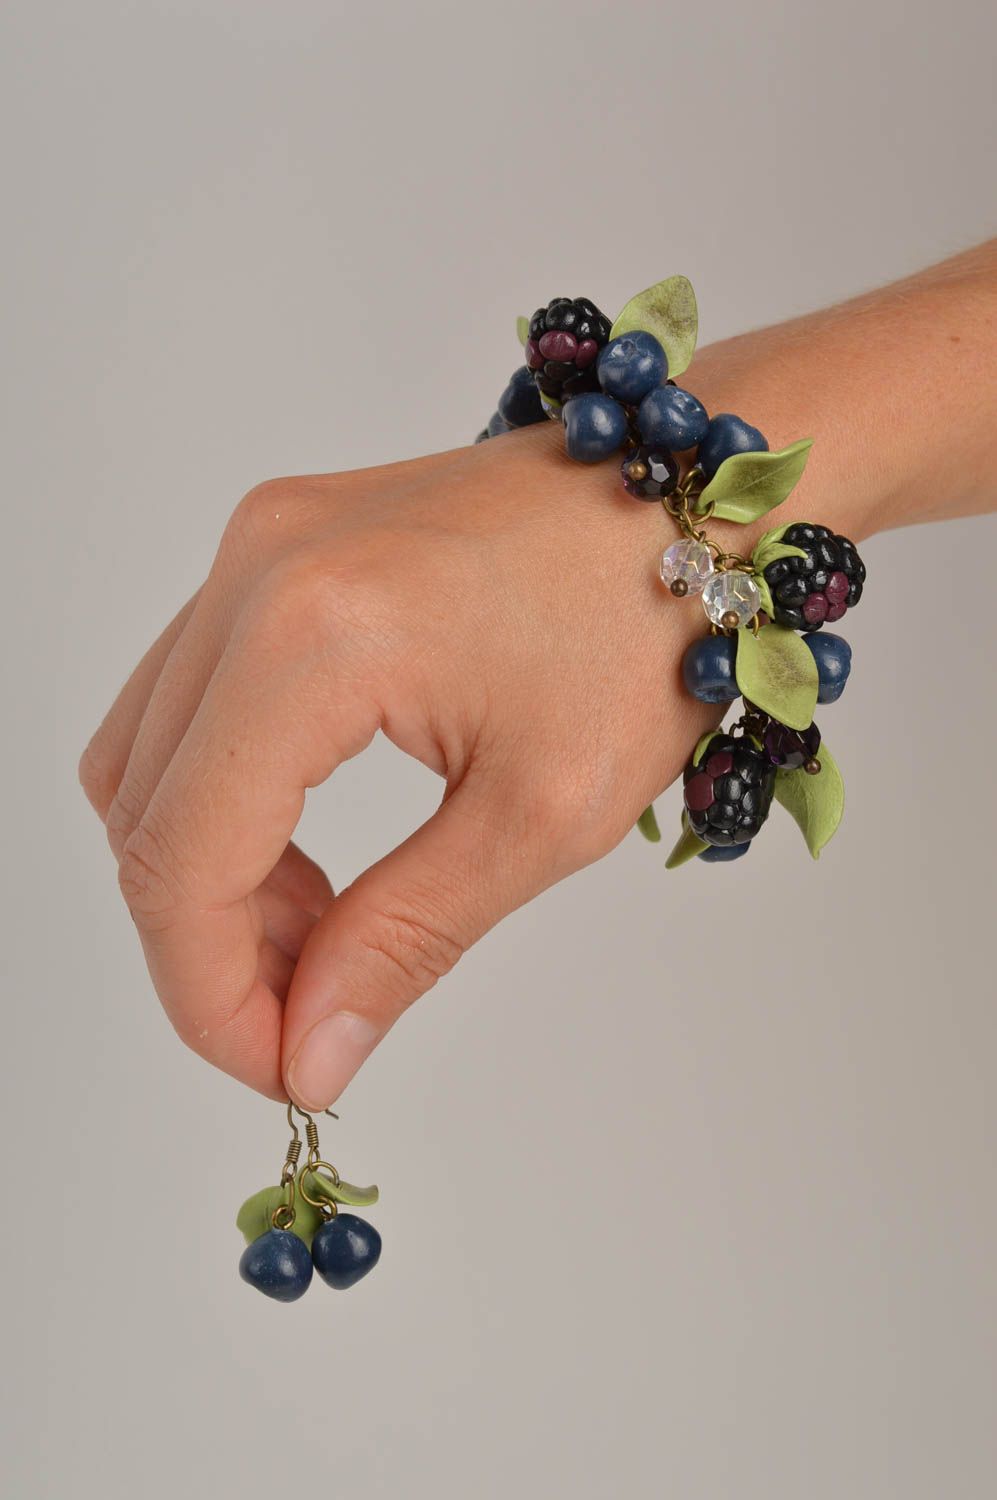 Wrist bracelet fashion earrings polymer clay jewelry forest berry women jewelry photo 2